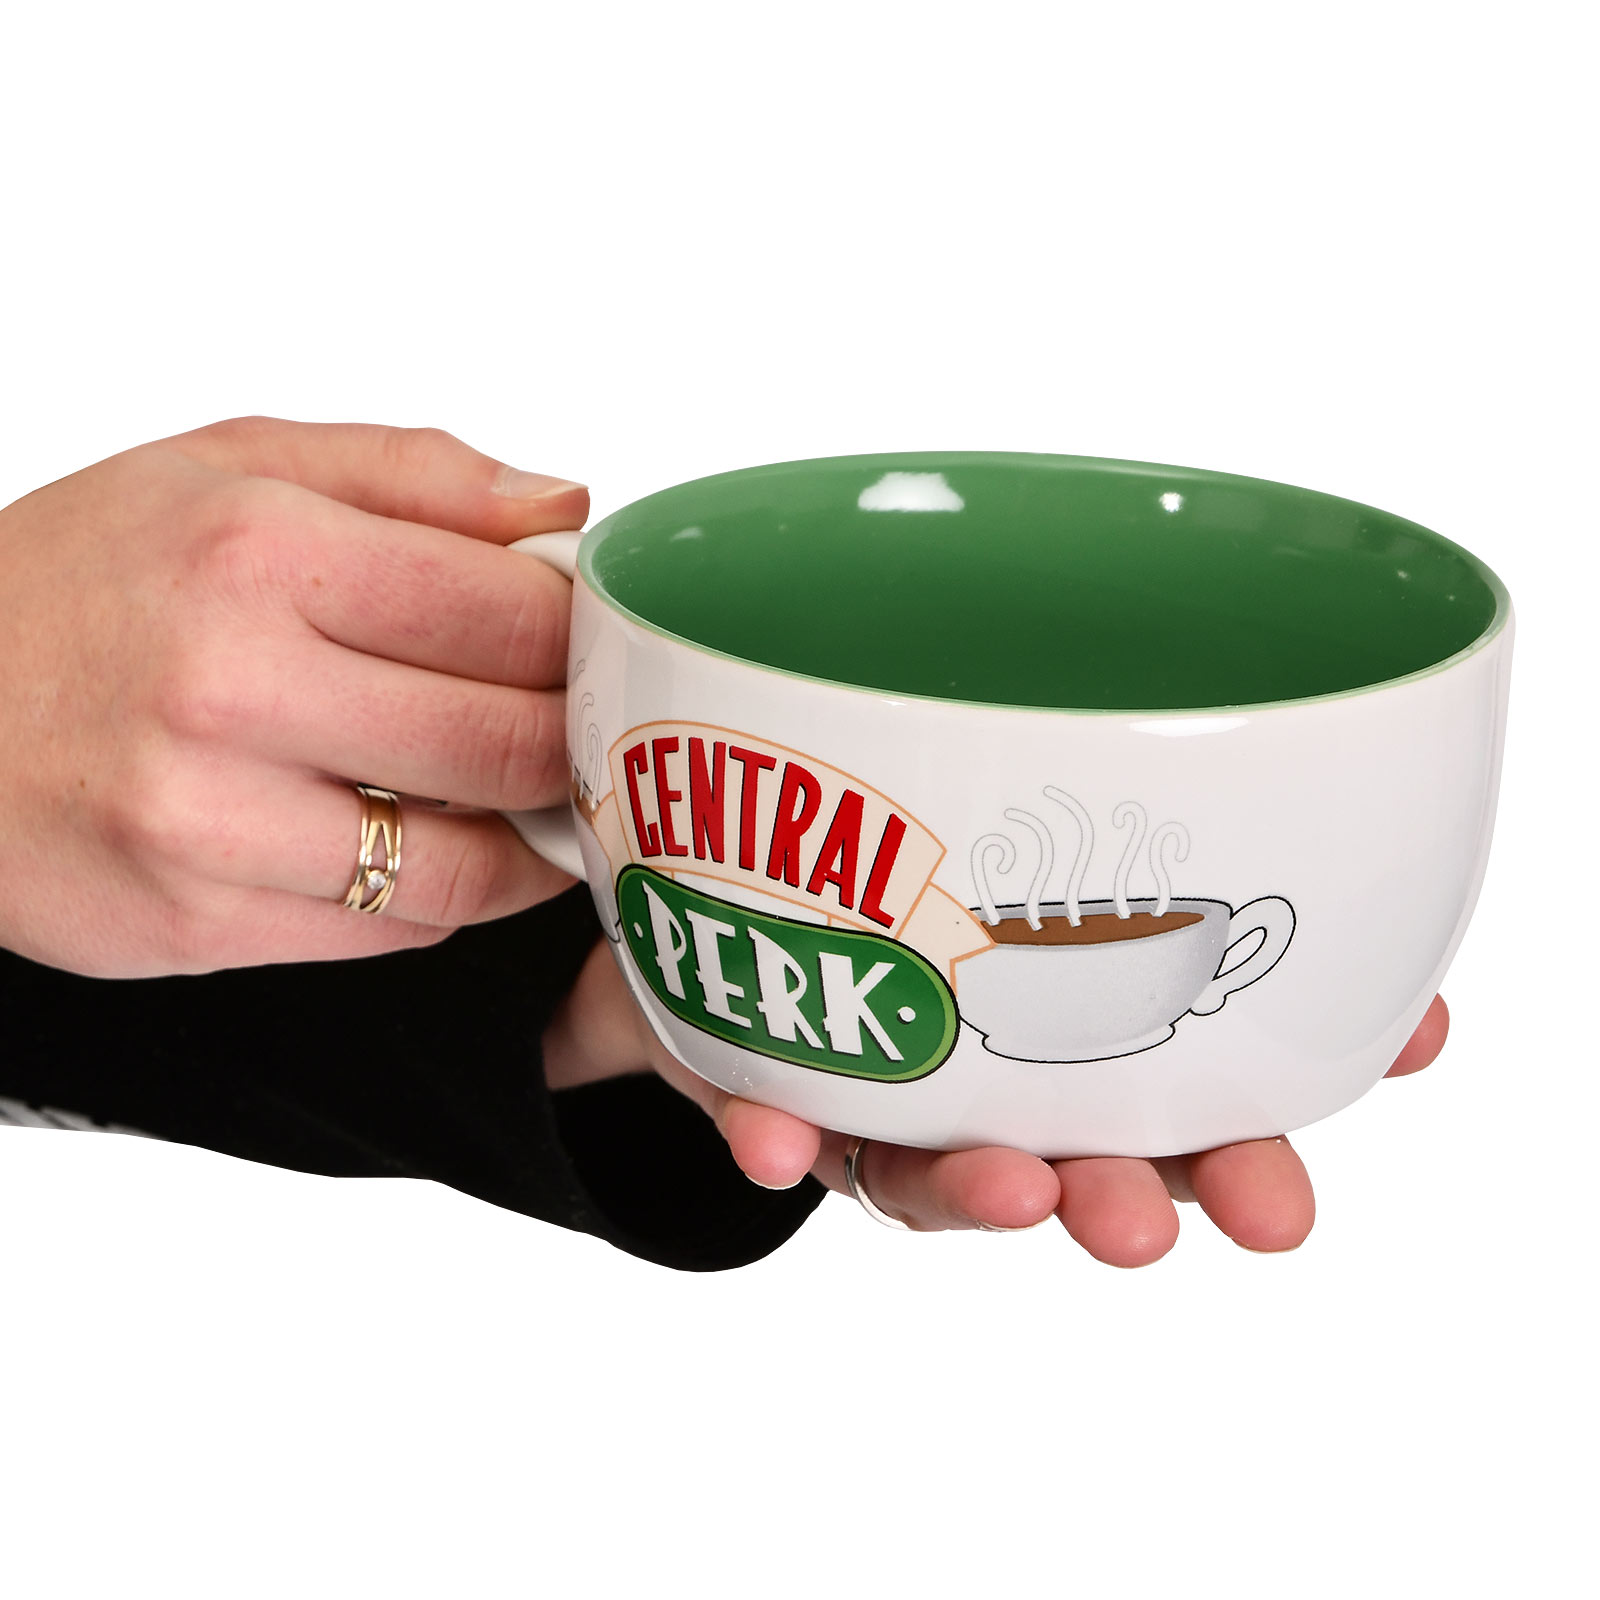 Friends - Central Perk Breakfast Set